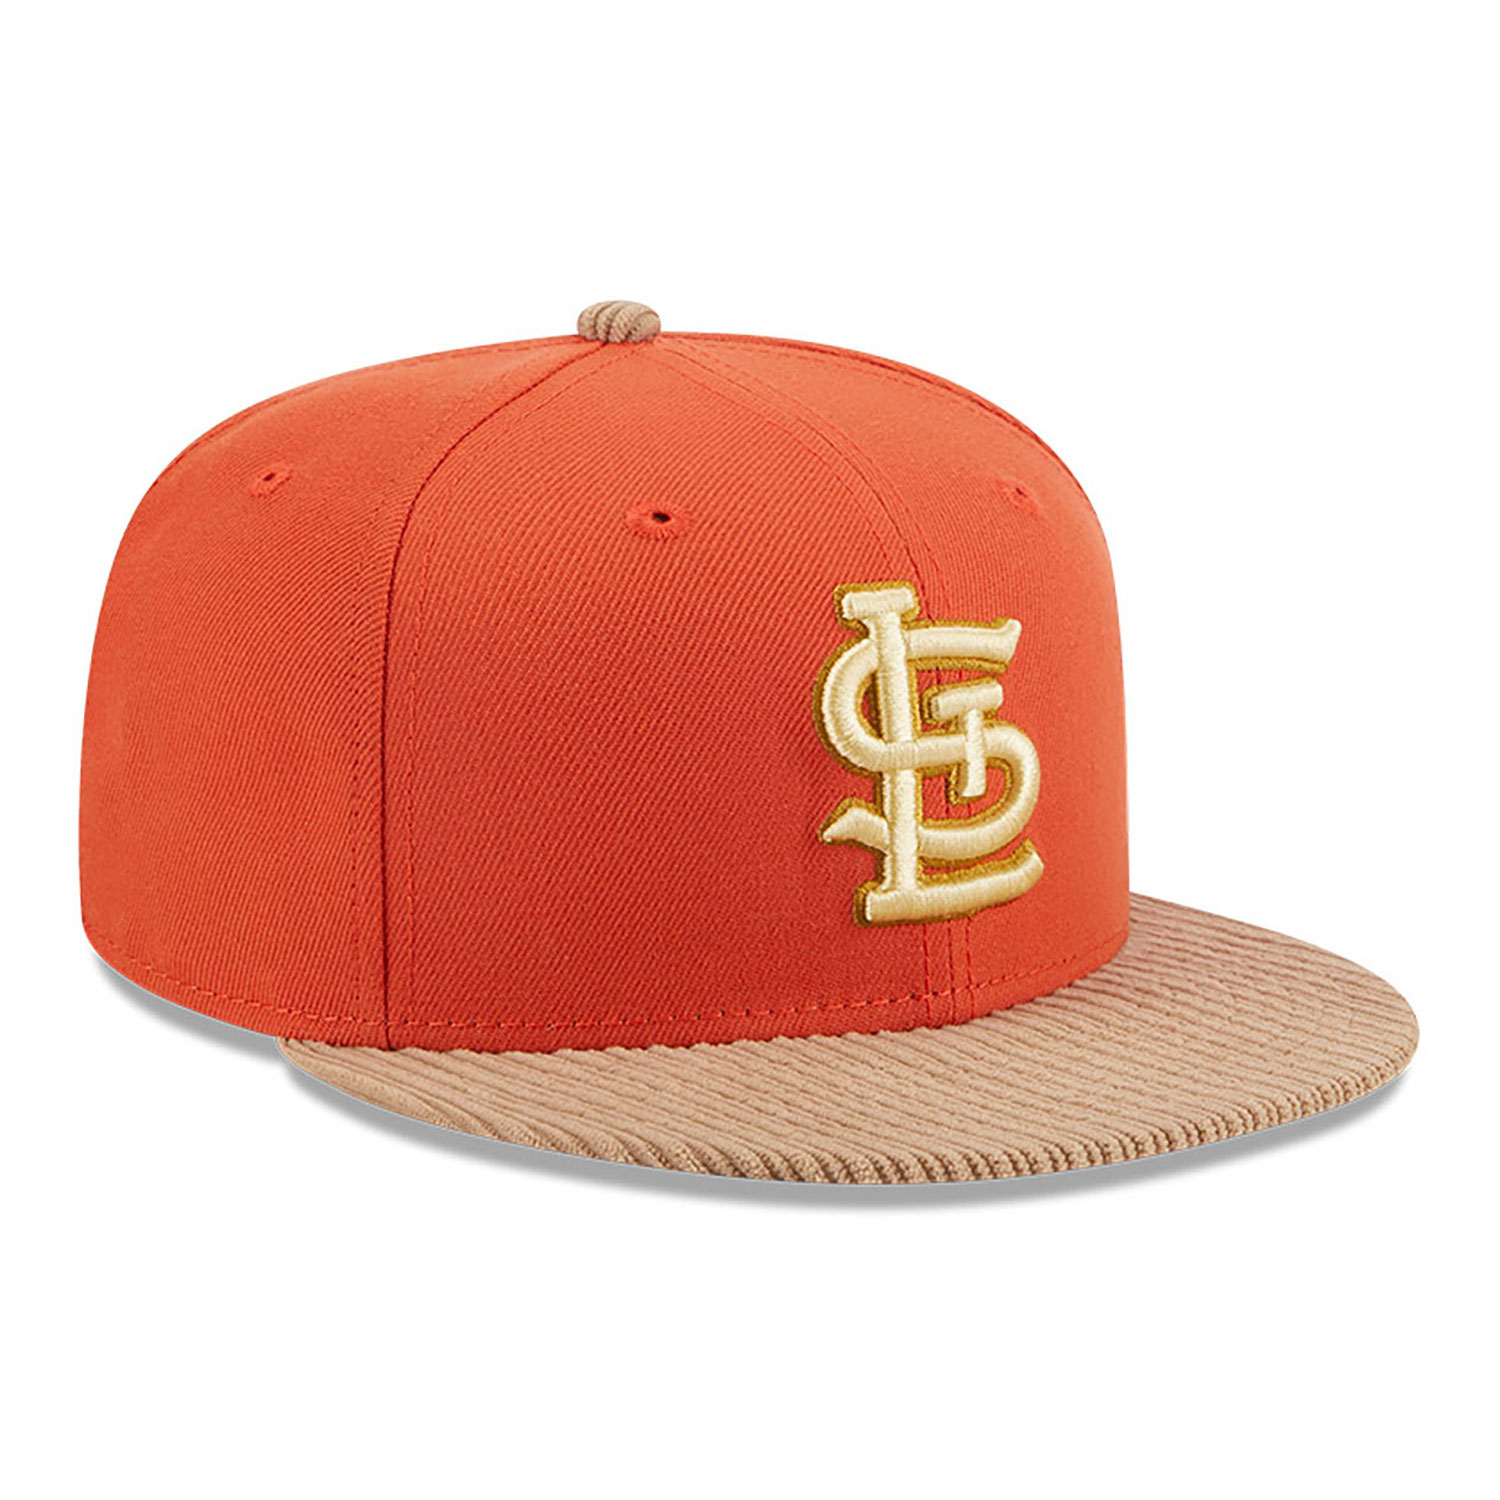 St. Louis Cardinals MLB Autumn Wheat Dark Orange 9FIFTY Snapback Cap